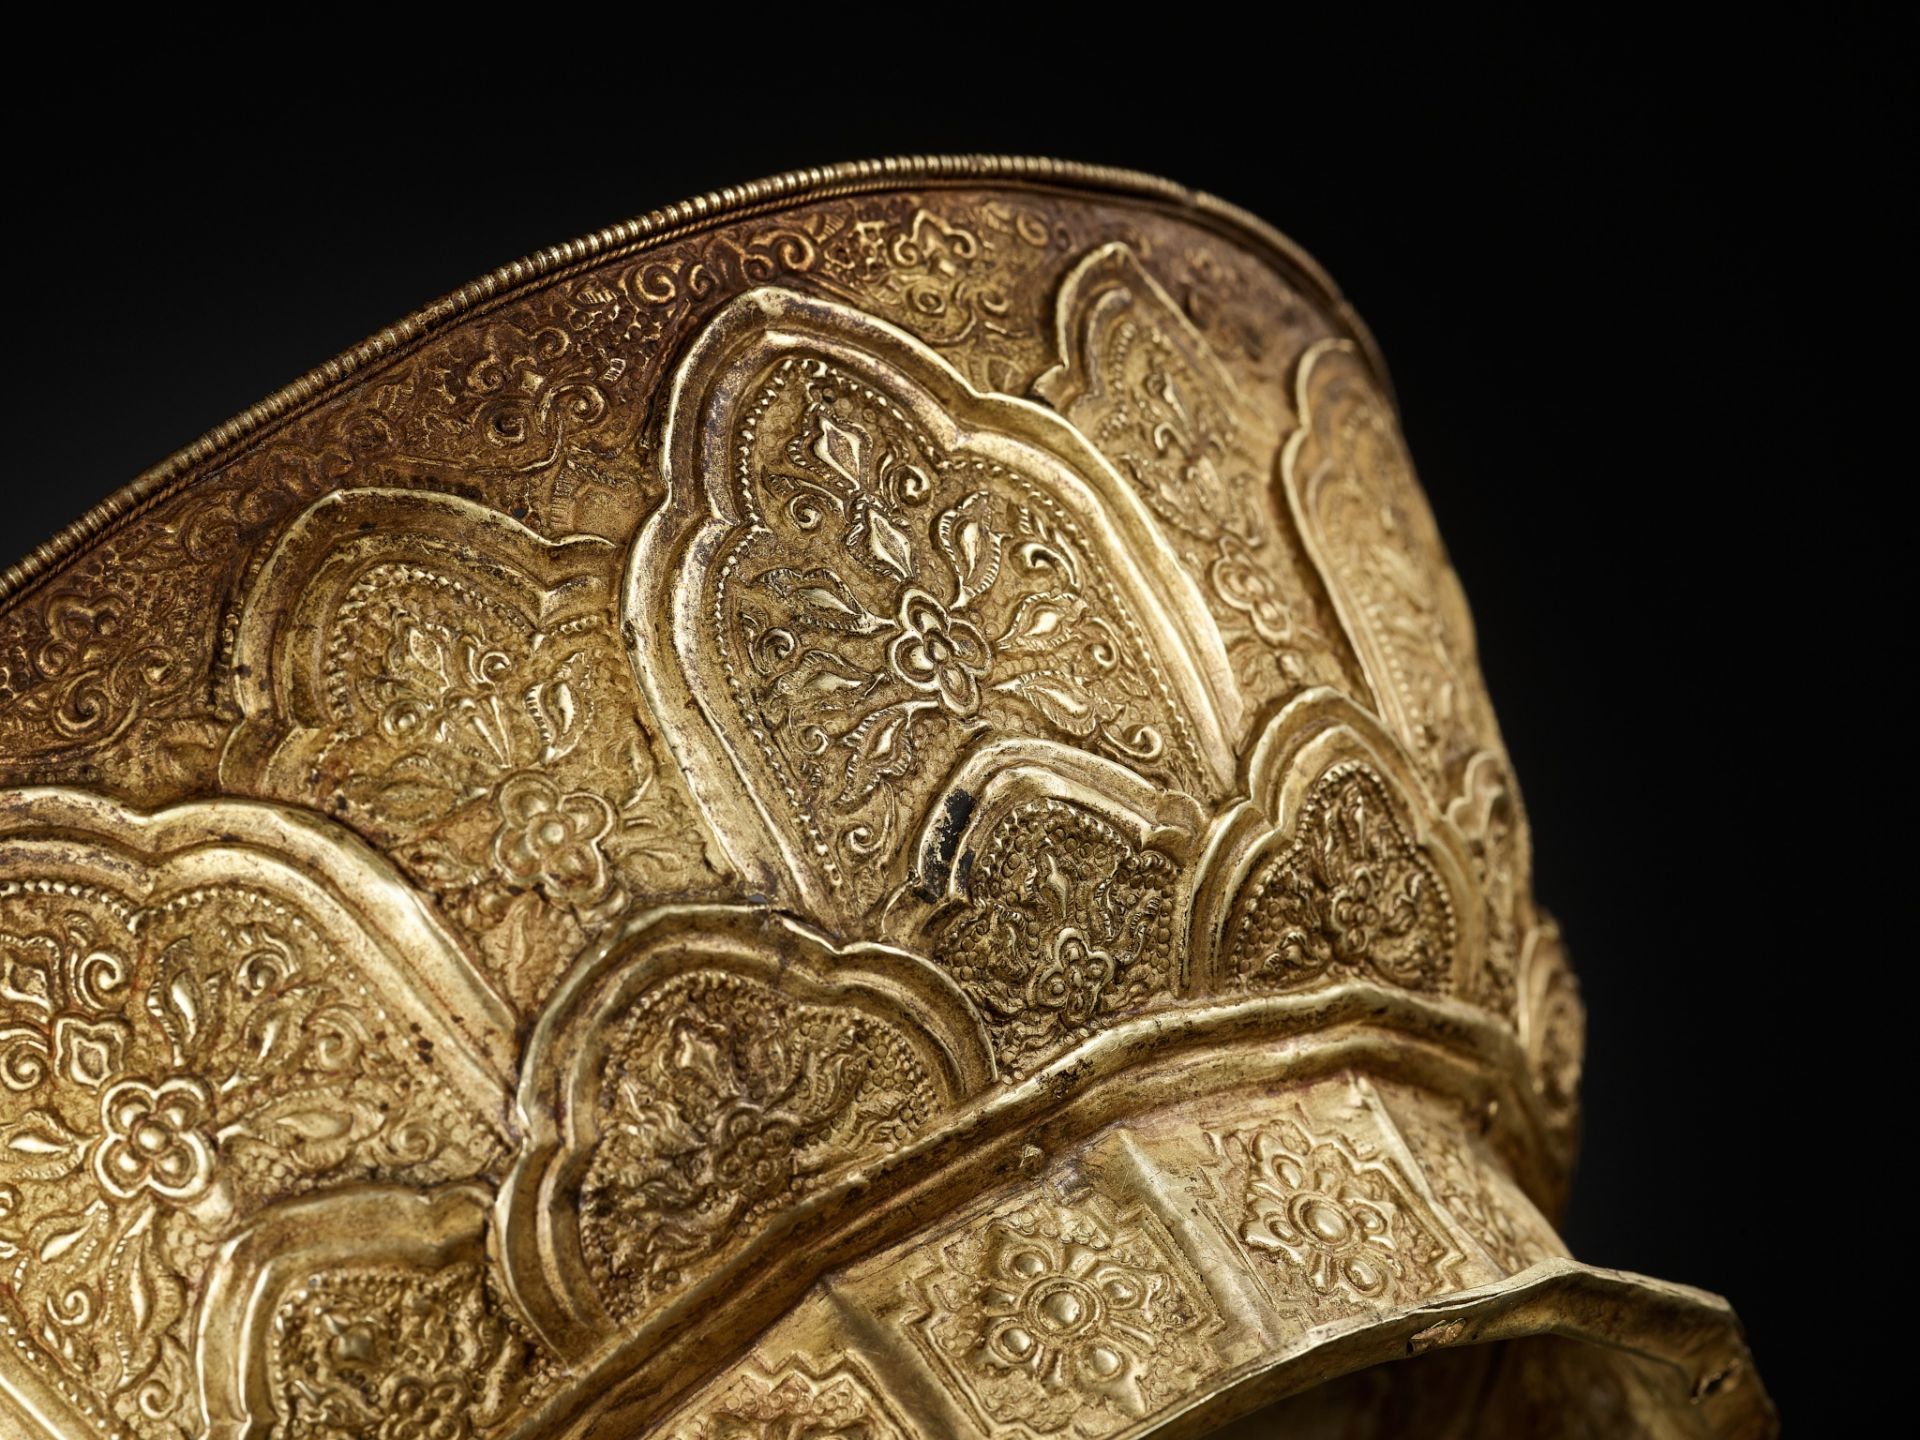 A SILVER-INLAID GOLD REPOUSSÉ BOWL DEPICTING GARUDA, VIETNAM,FORMER KINGDOMS OF CHAMPA,CIRCA 10TH C. - Image 9 of 18